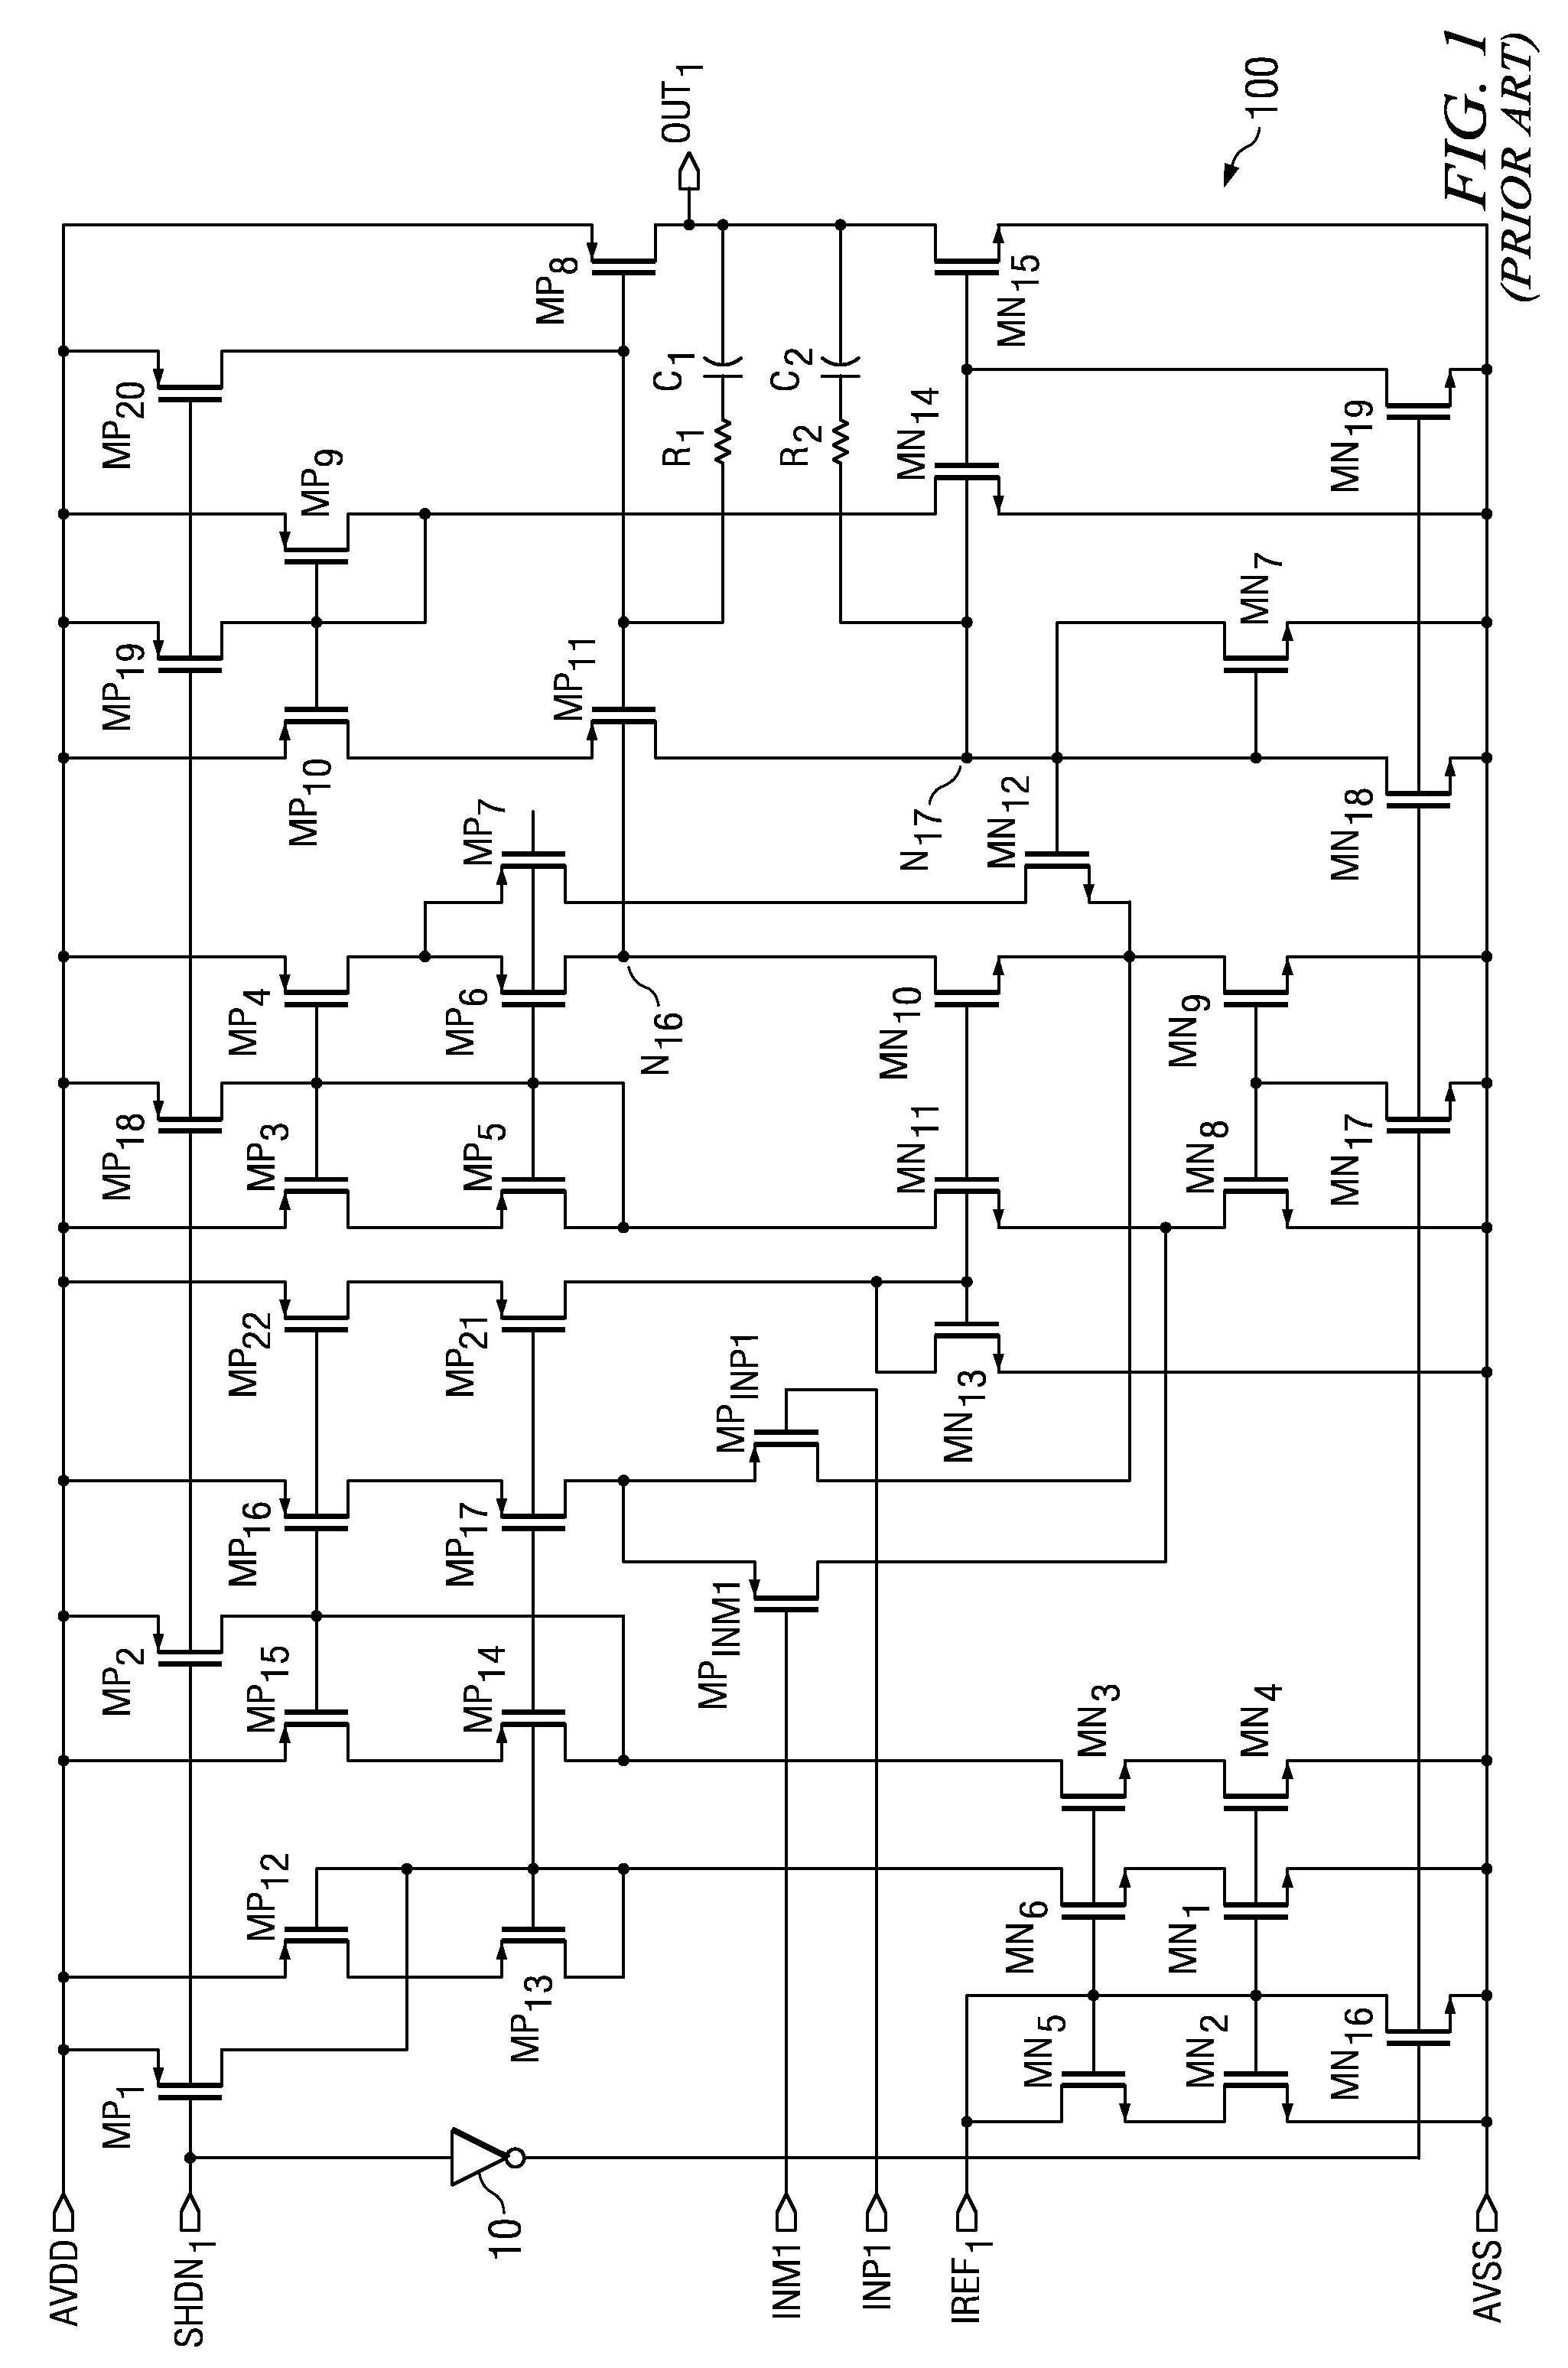 Low voltage amplifier having a class-AB control circuit